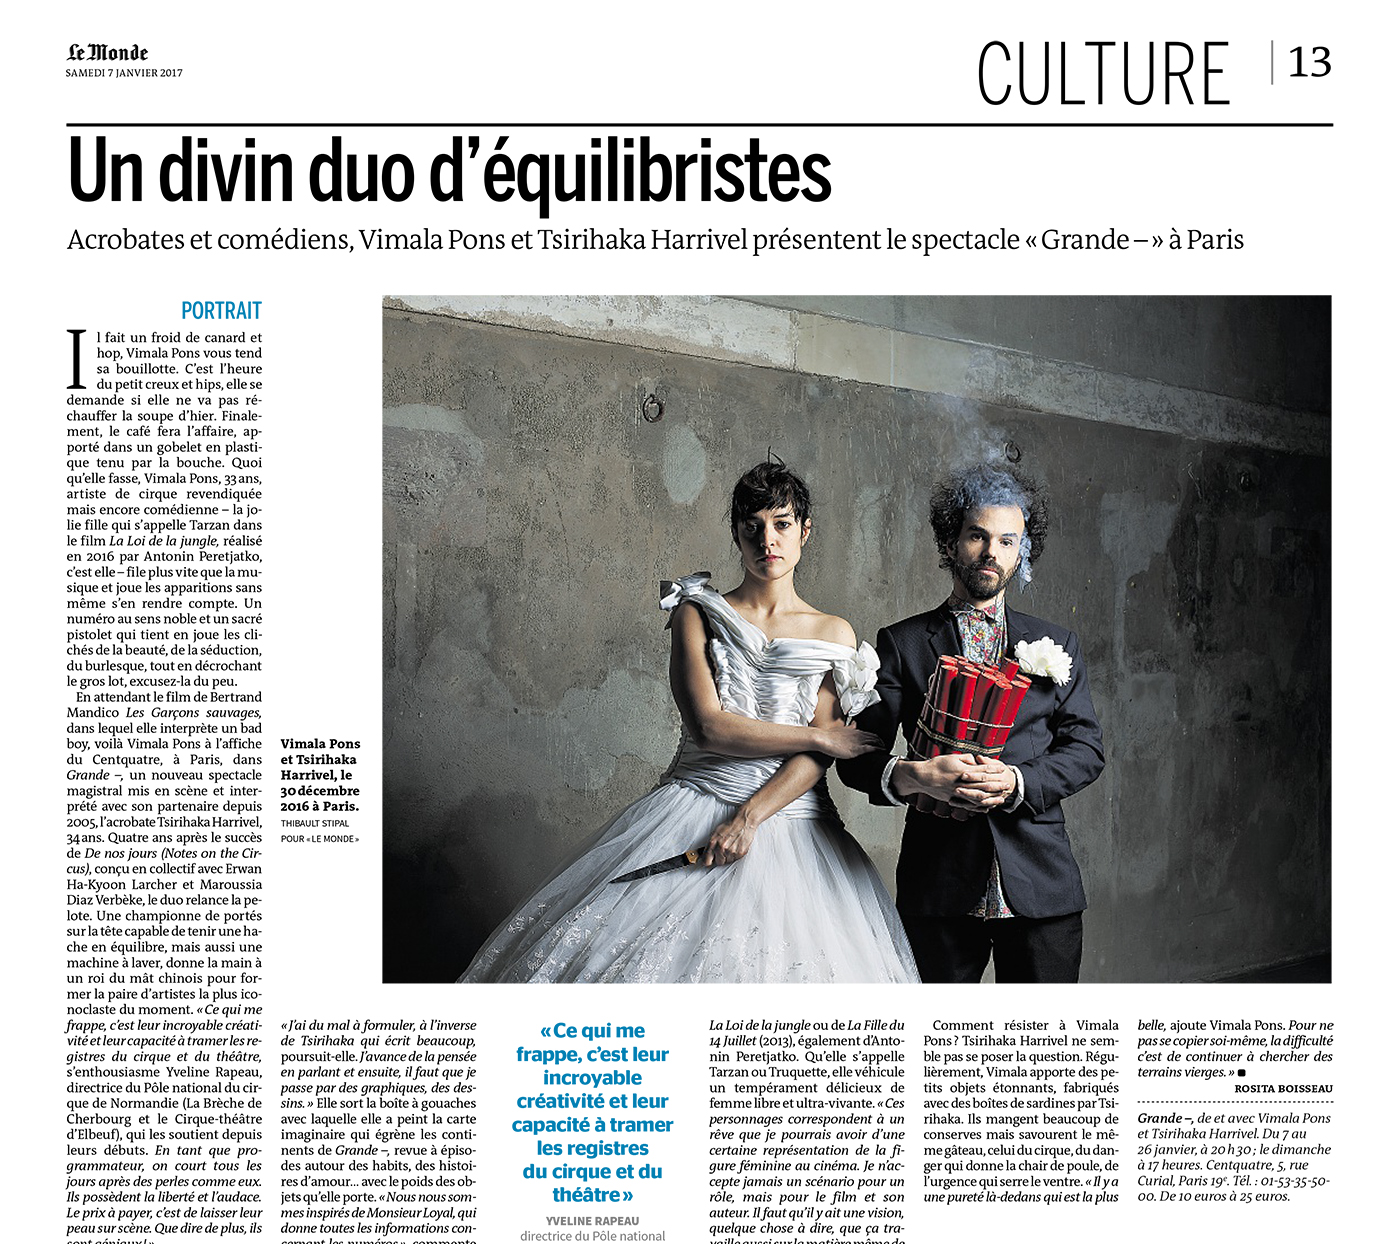 Thibault Stipal - Photographer - Vimala & Tsirihaka pour Le Monde - 1